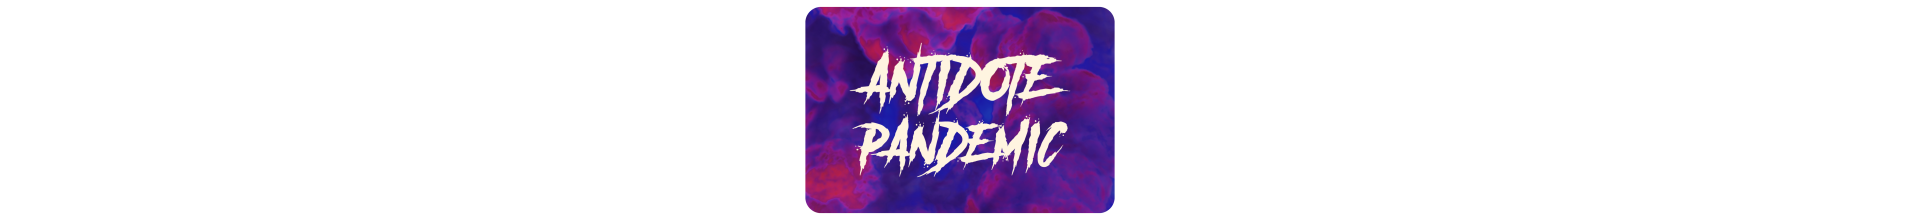 PANDEMIC x ANTIDOTE